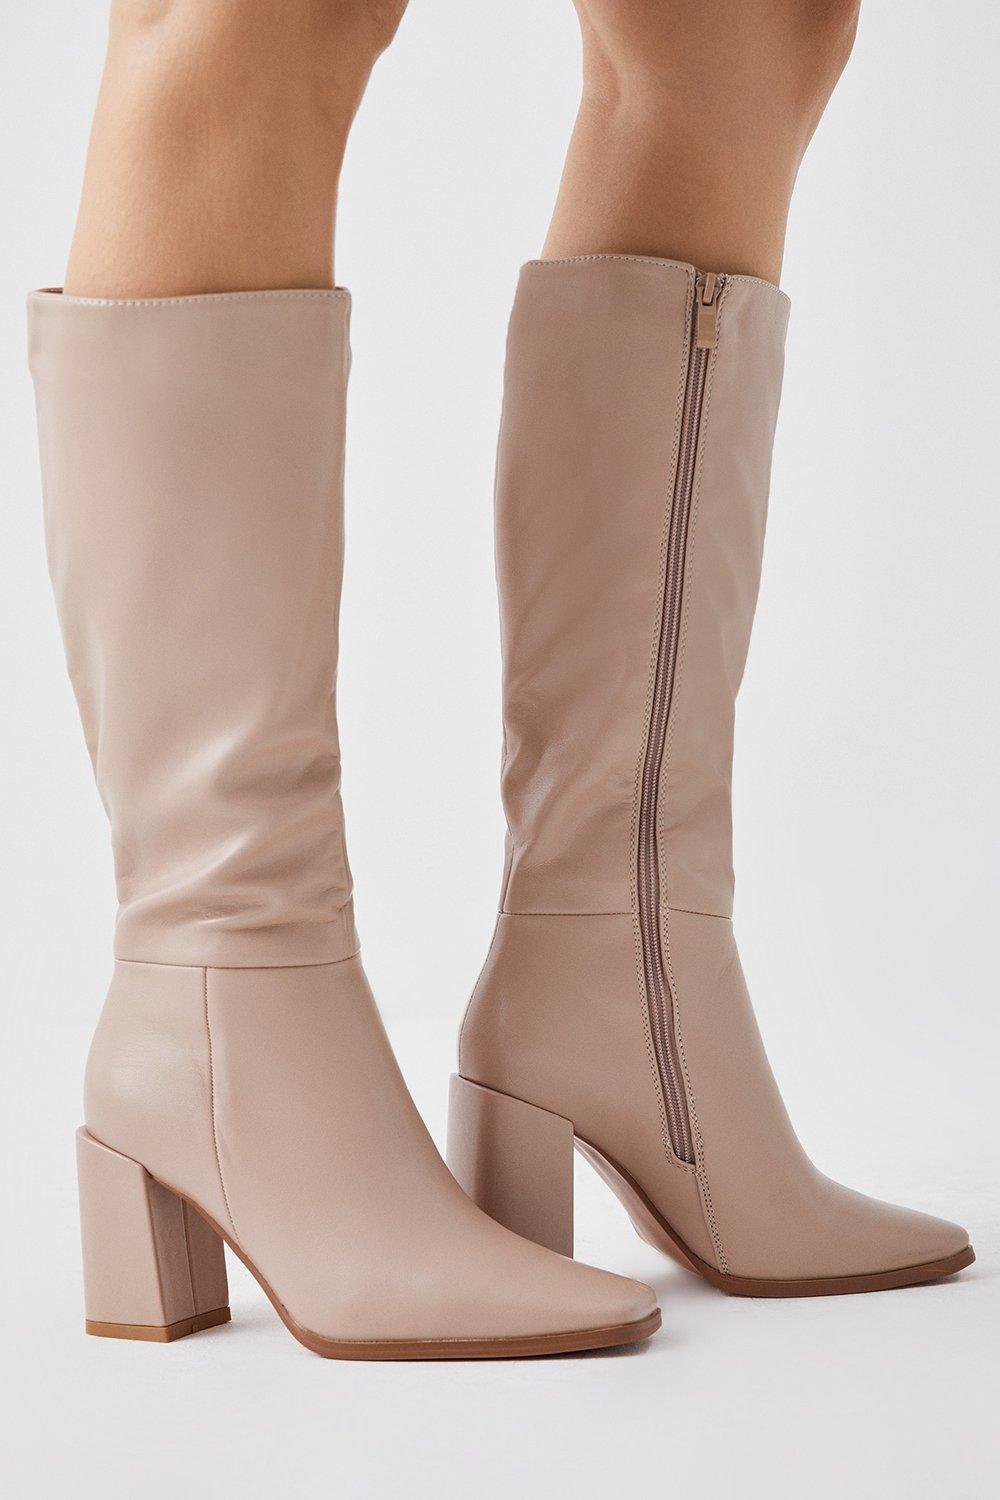 Women’s Kristen Square Toe Clean Knee High Boots - beige - 6